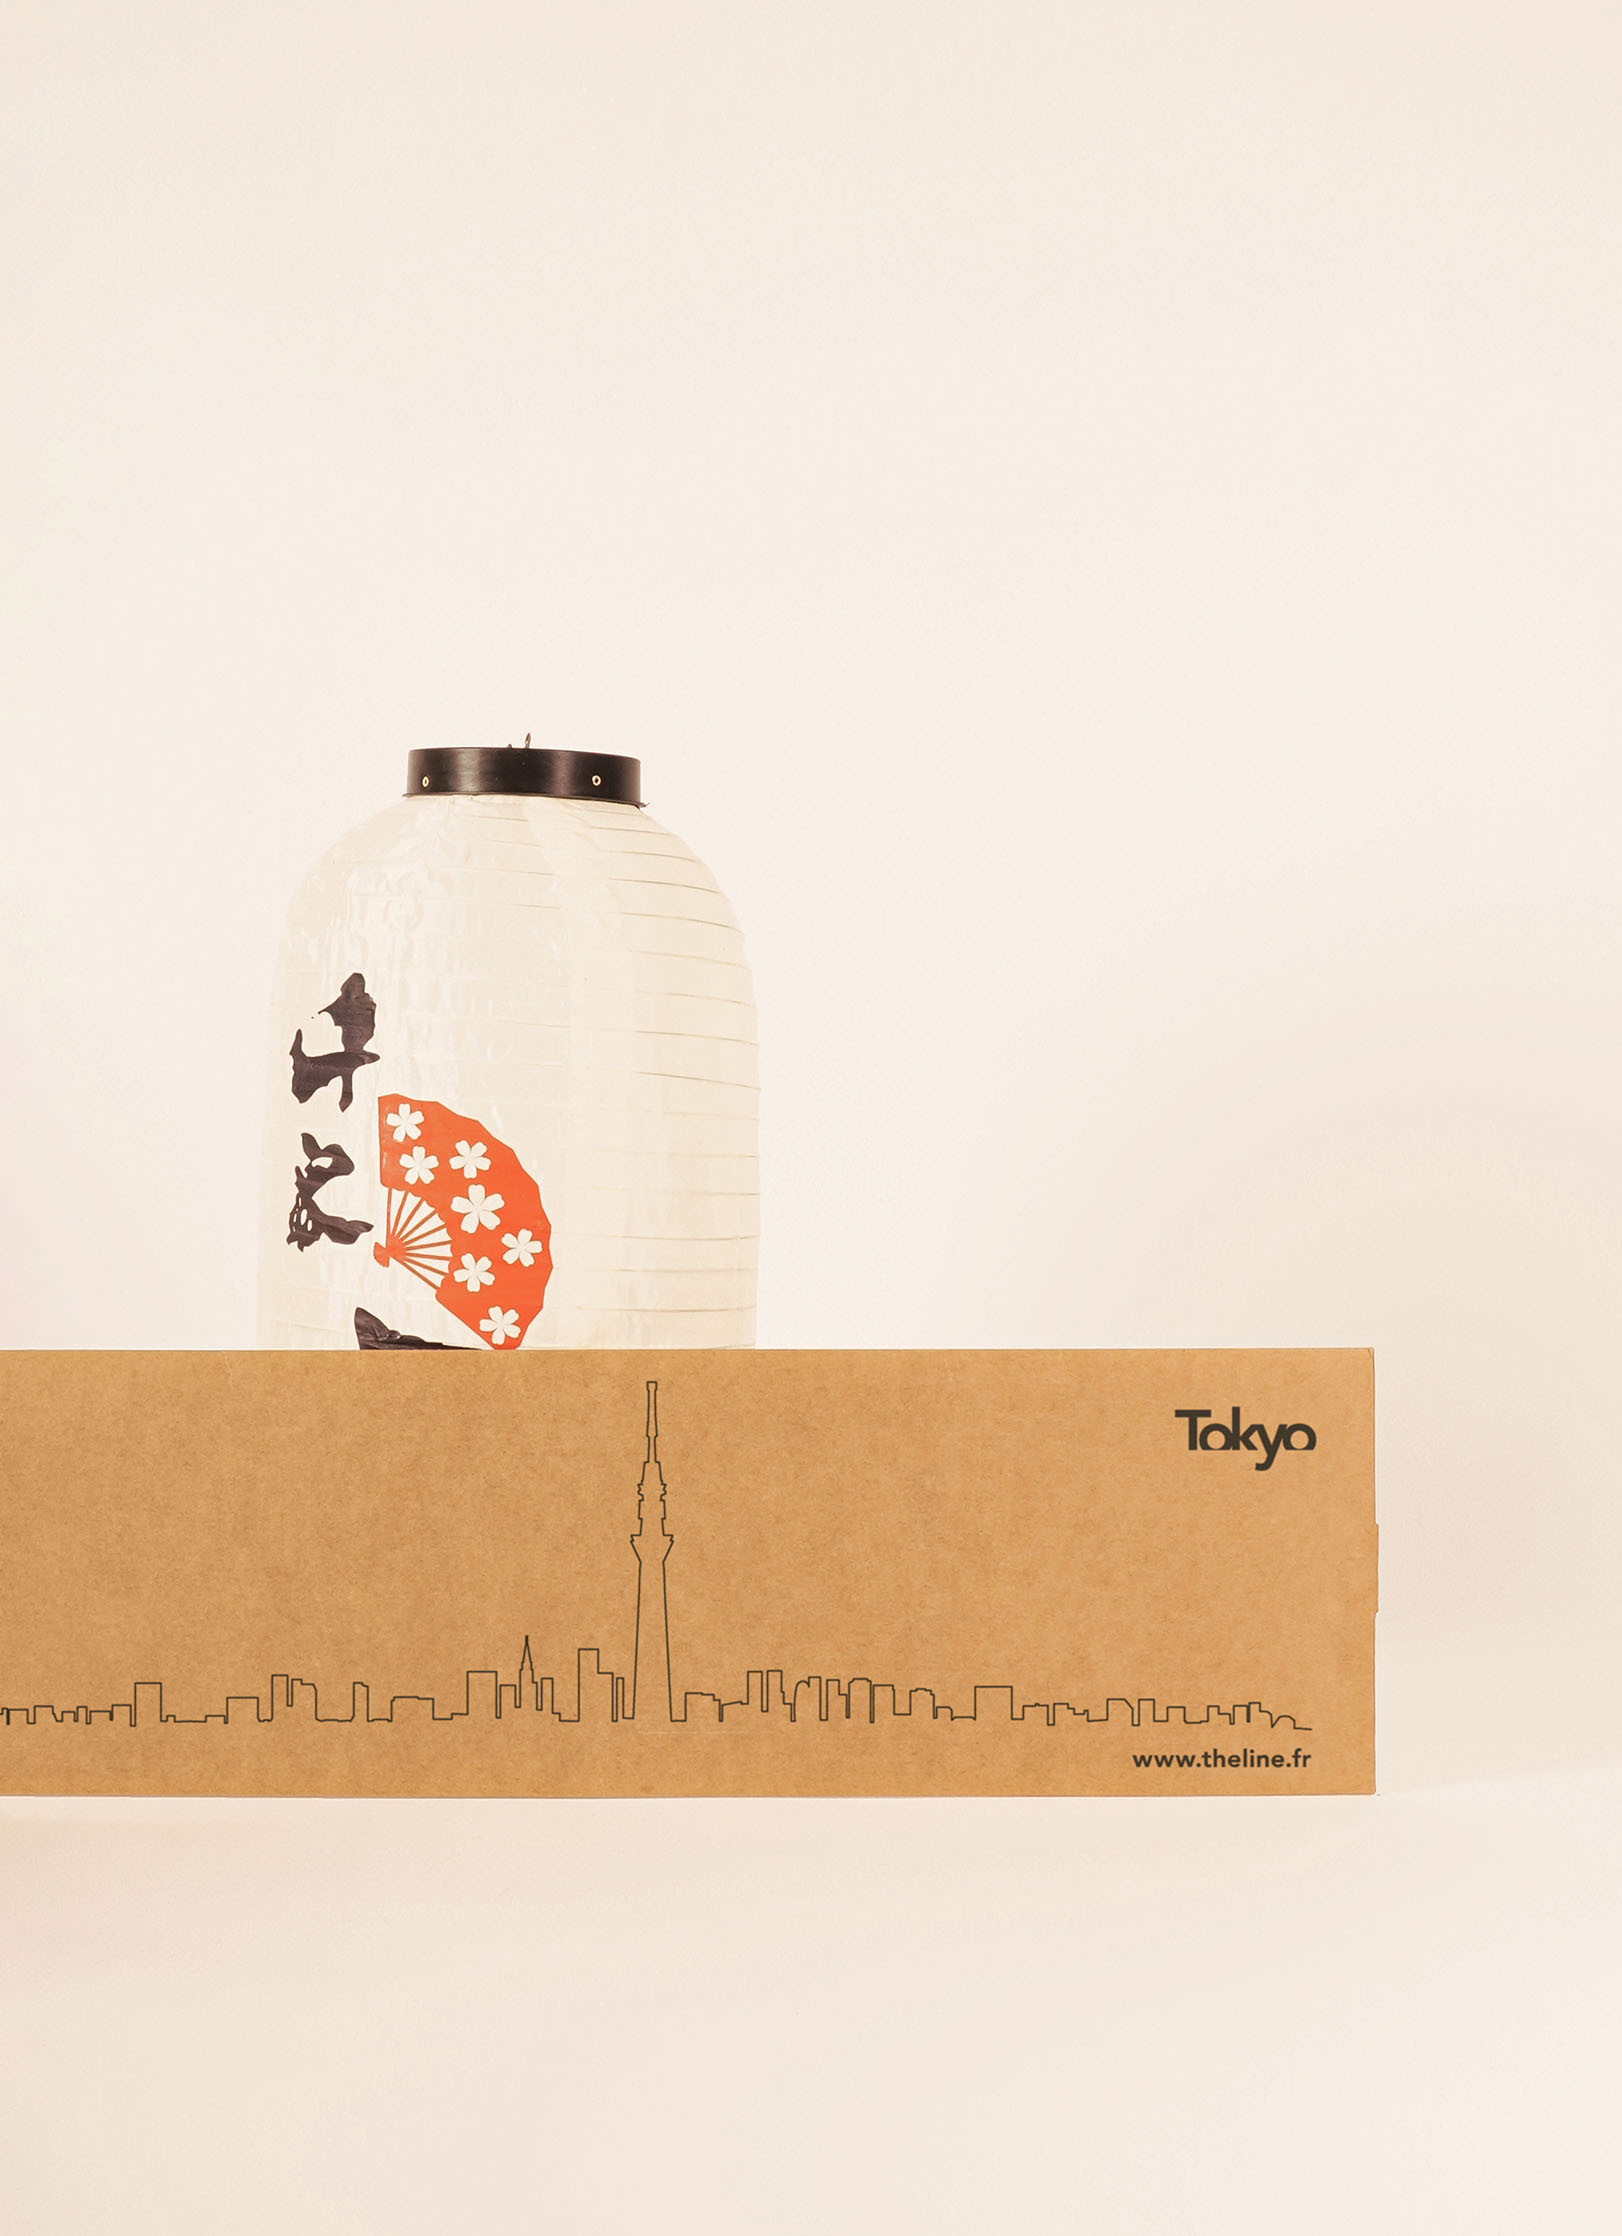 Packaging de la déco murale de Tokyo XL